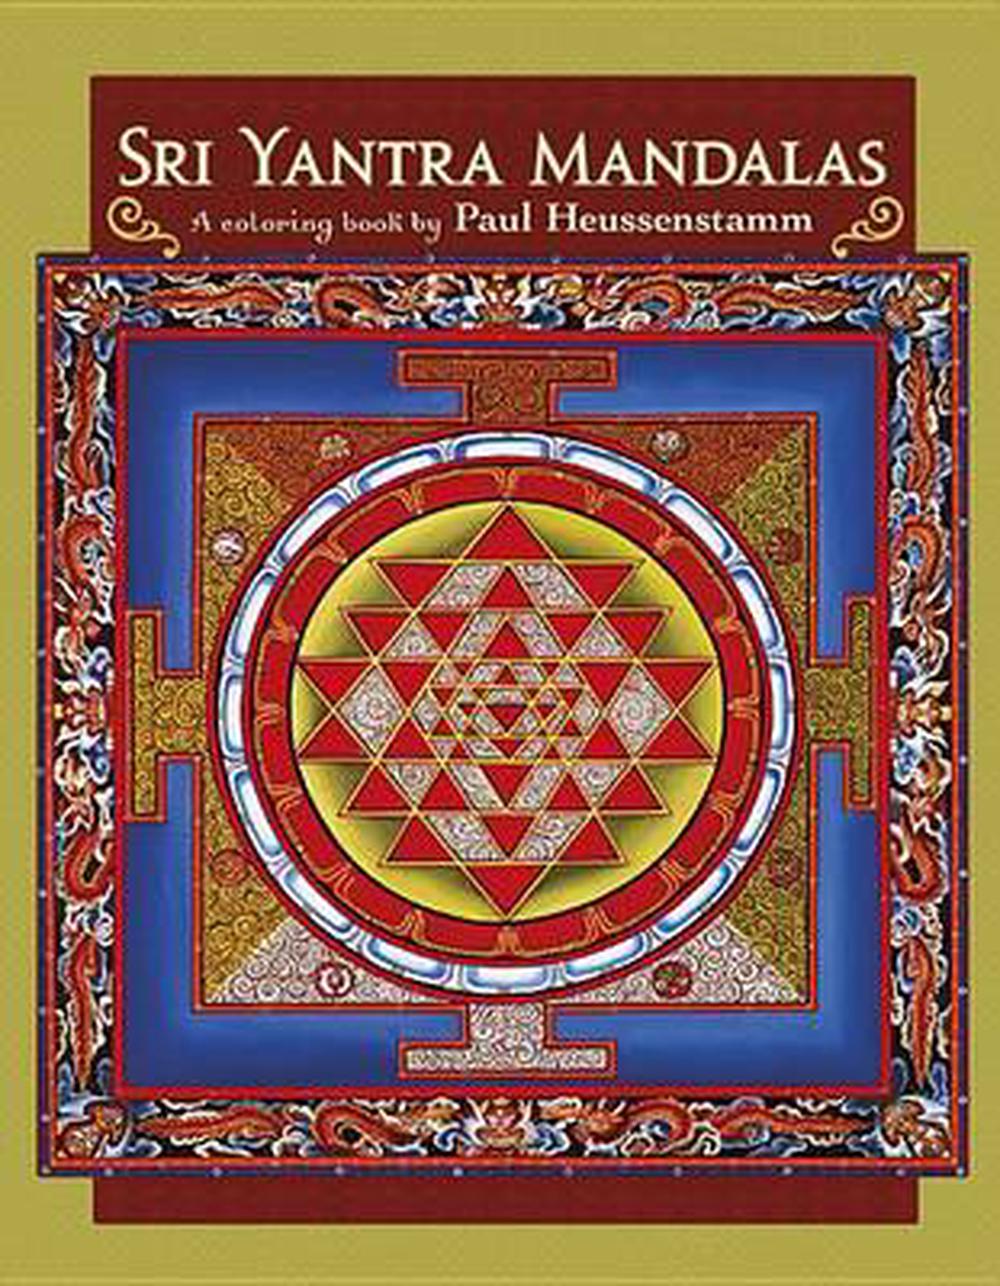 Sri Yantra Mandalas: A Coloring Book by Paul Heussenstamm by Paul ...